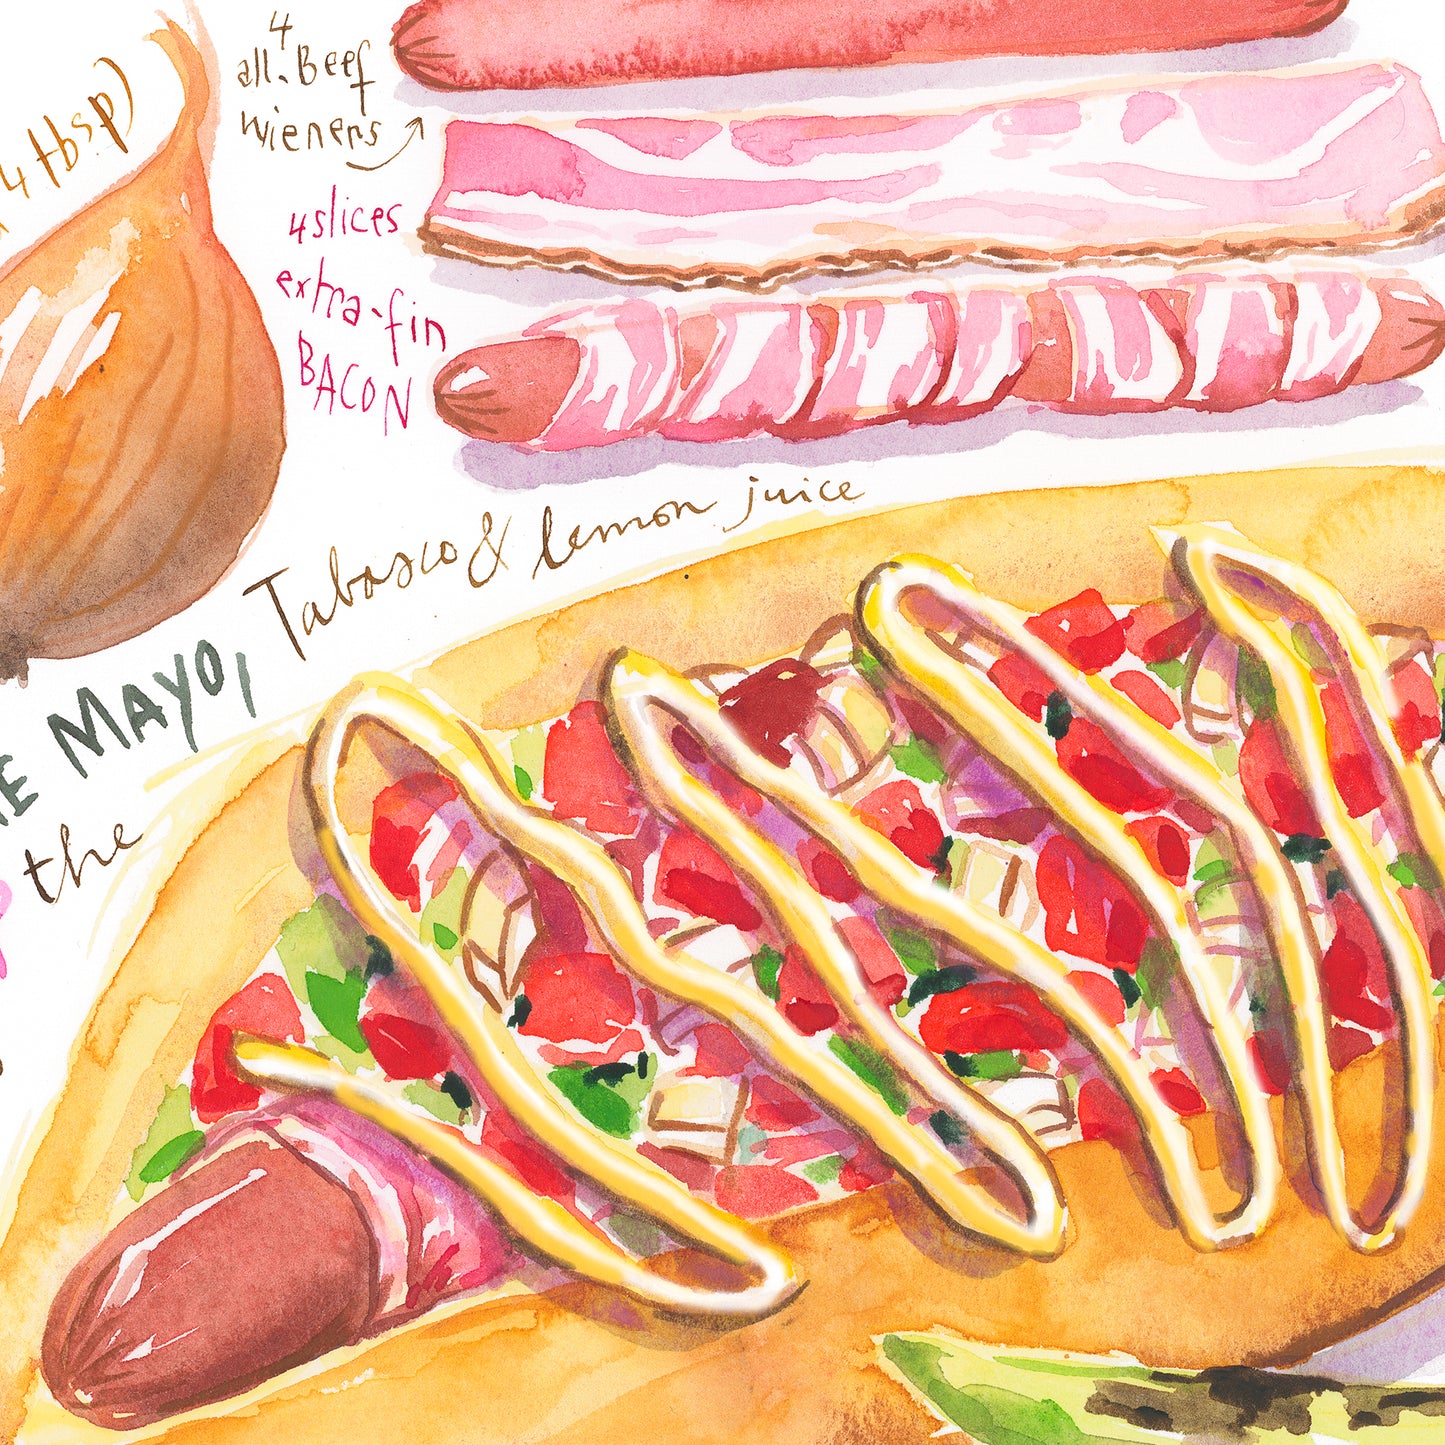 Sonoran Hot Dog recipe